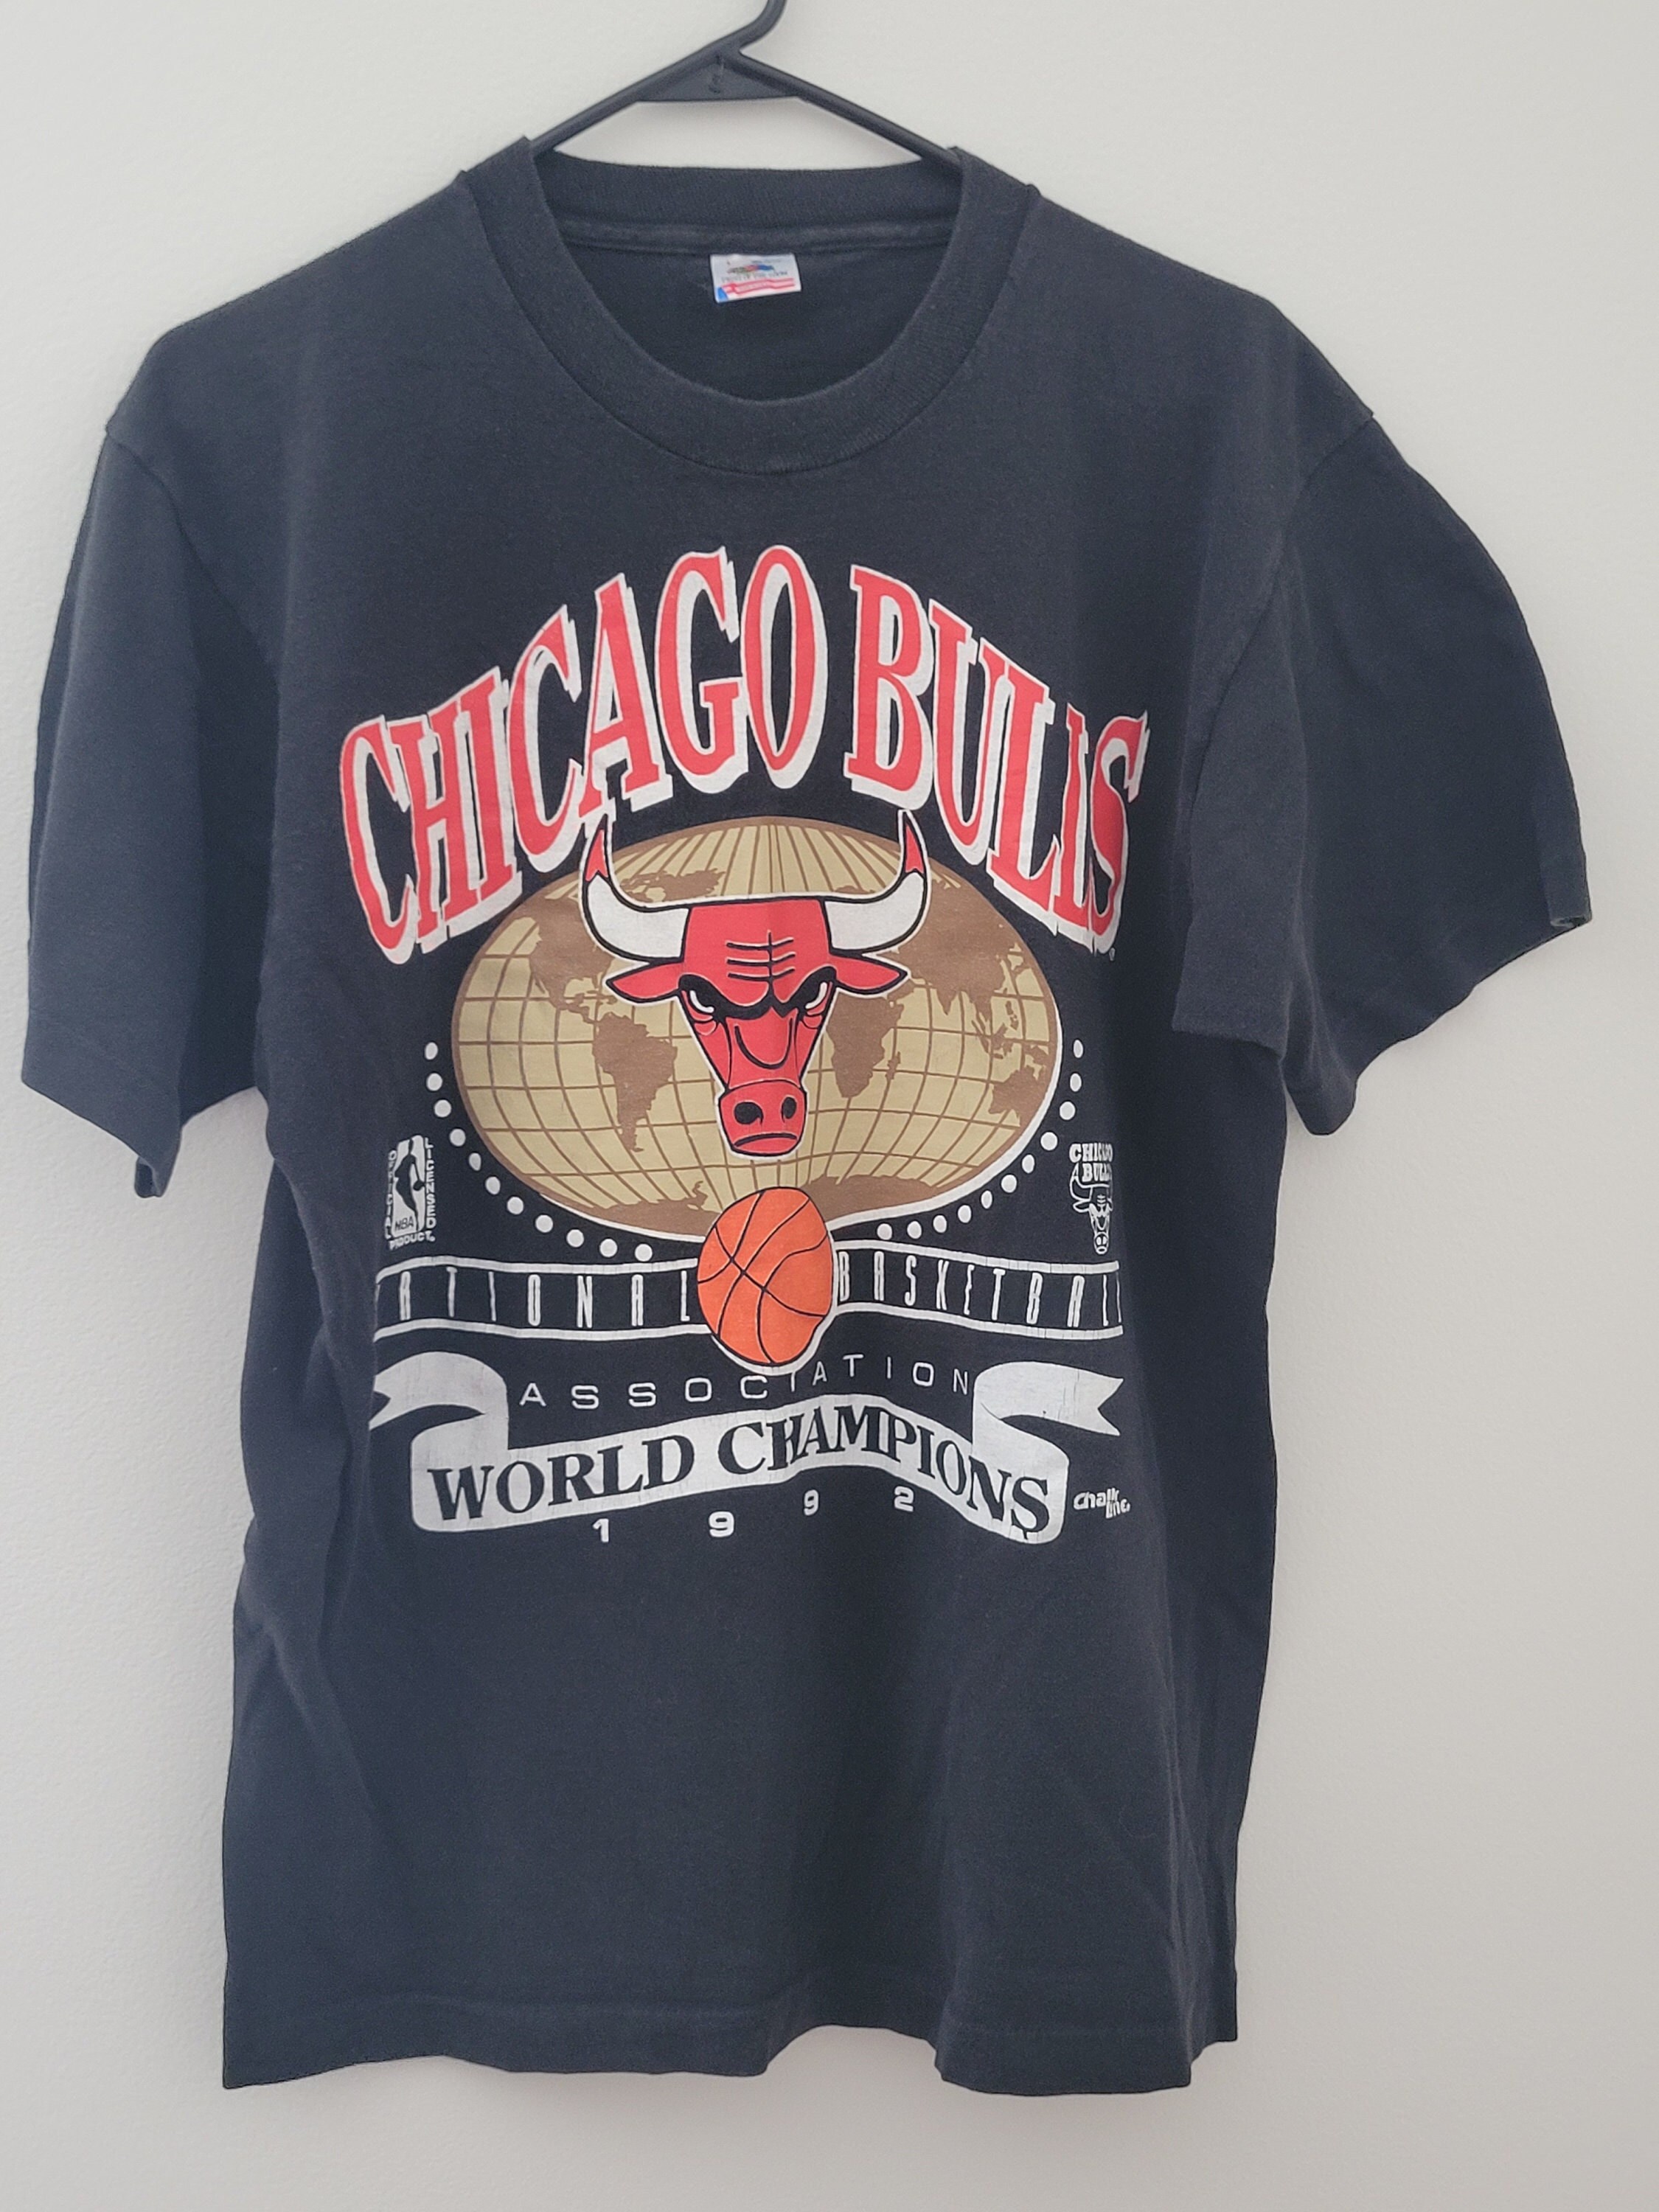 XL NOS Vintage 1996 Chicago Bulls NBA Champion Tee T-shirt by